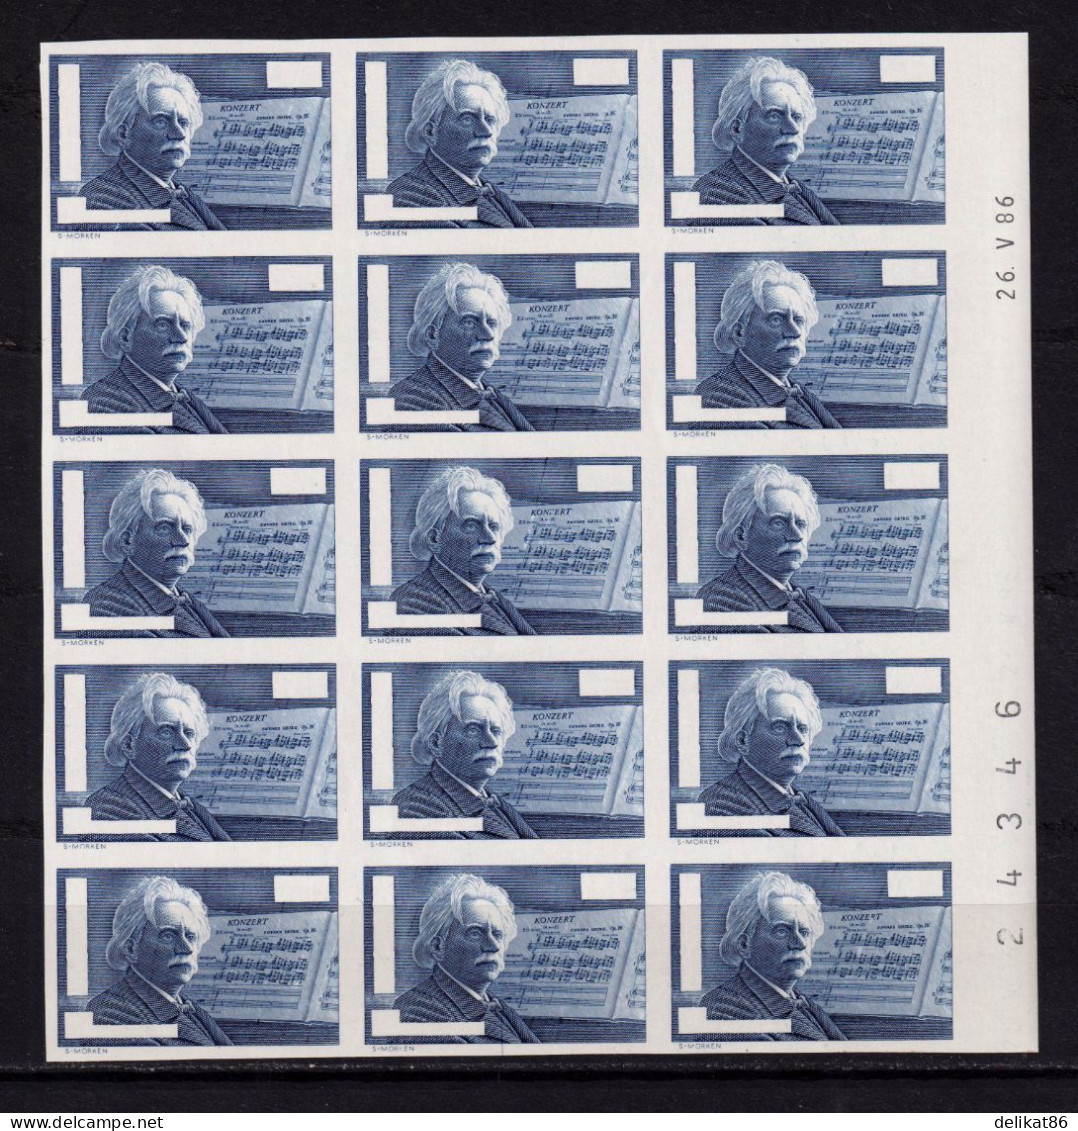 Test Booklet, Test Stamp, Specimen, Pureba Edvard Grieg 1986 - Proofs & Reprints